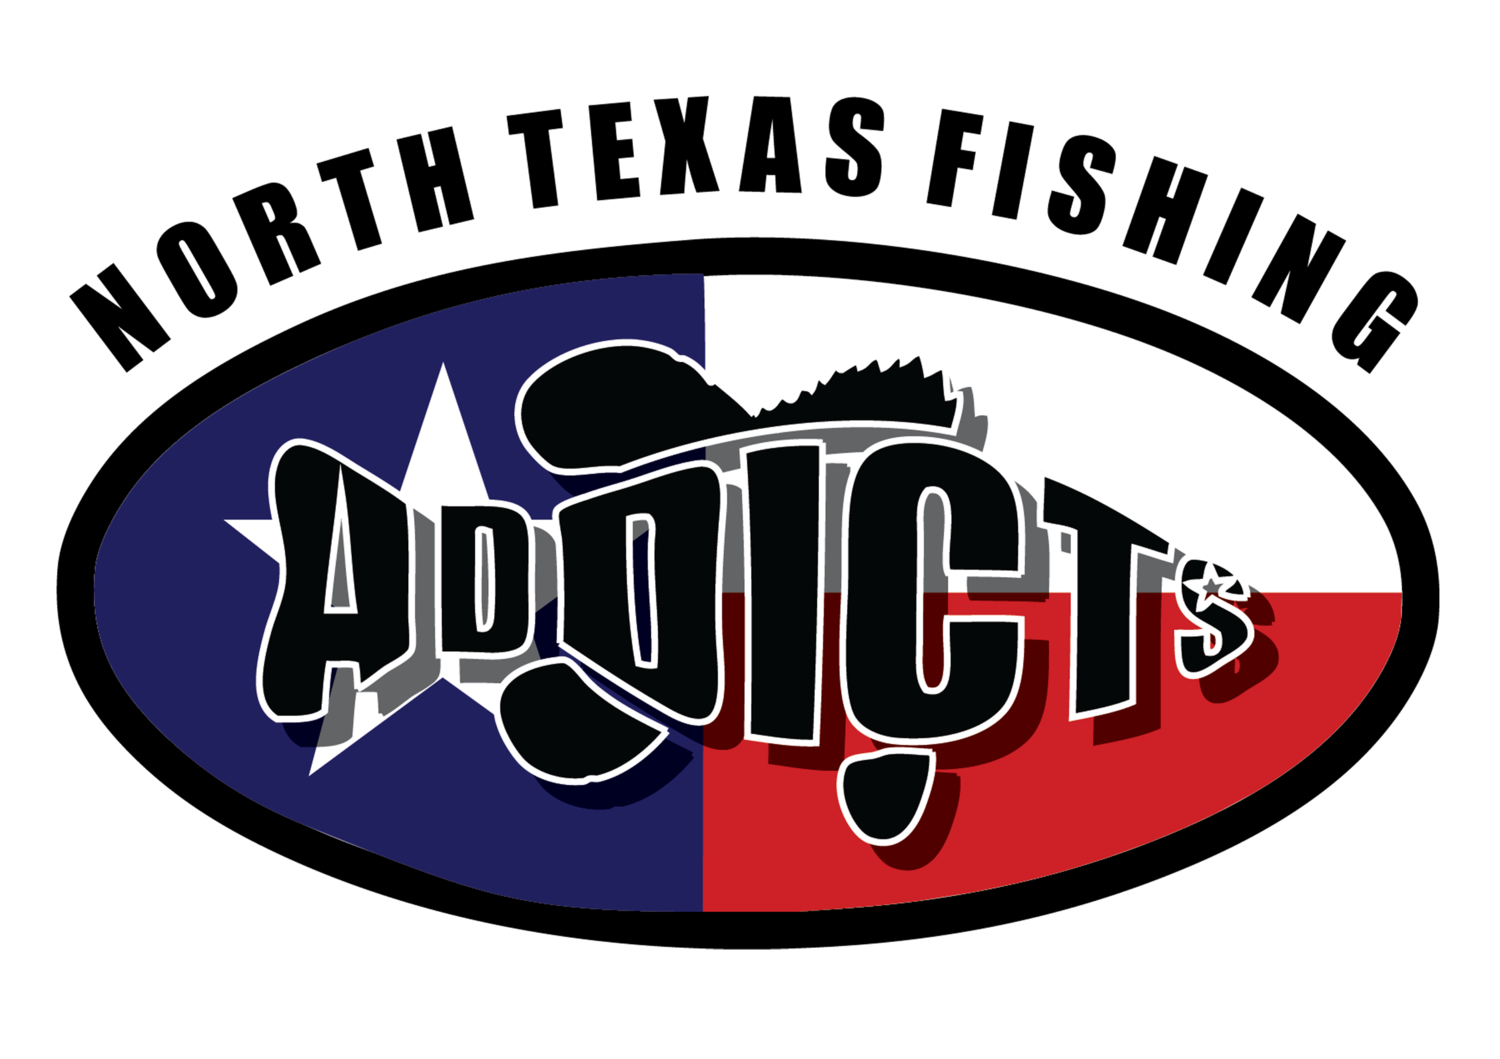 North Texas Fishing Addicts